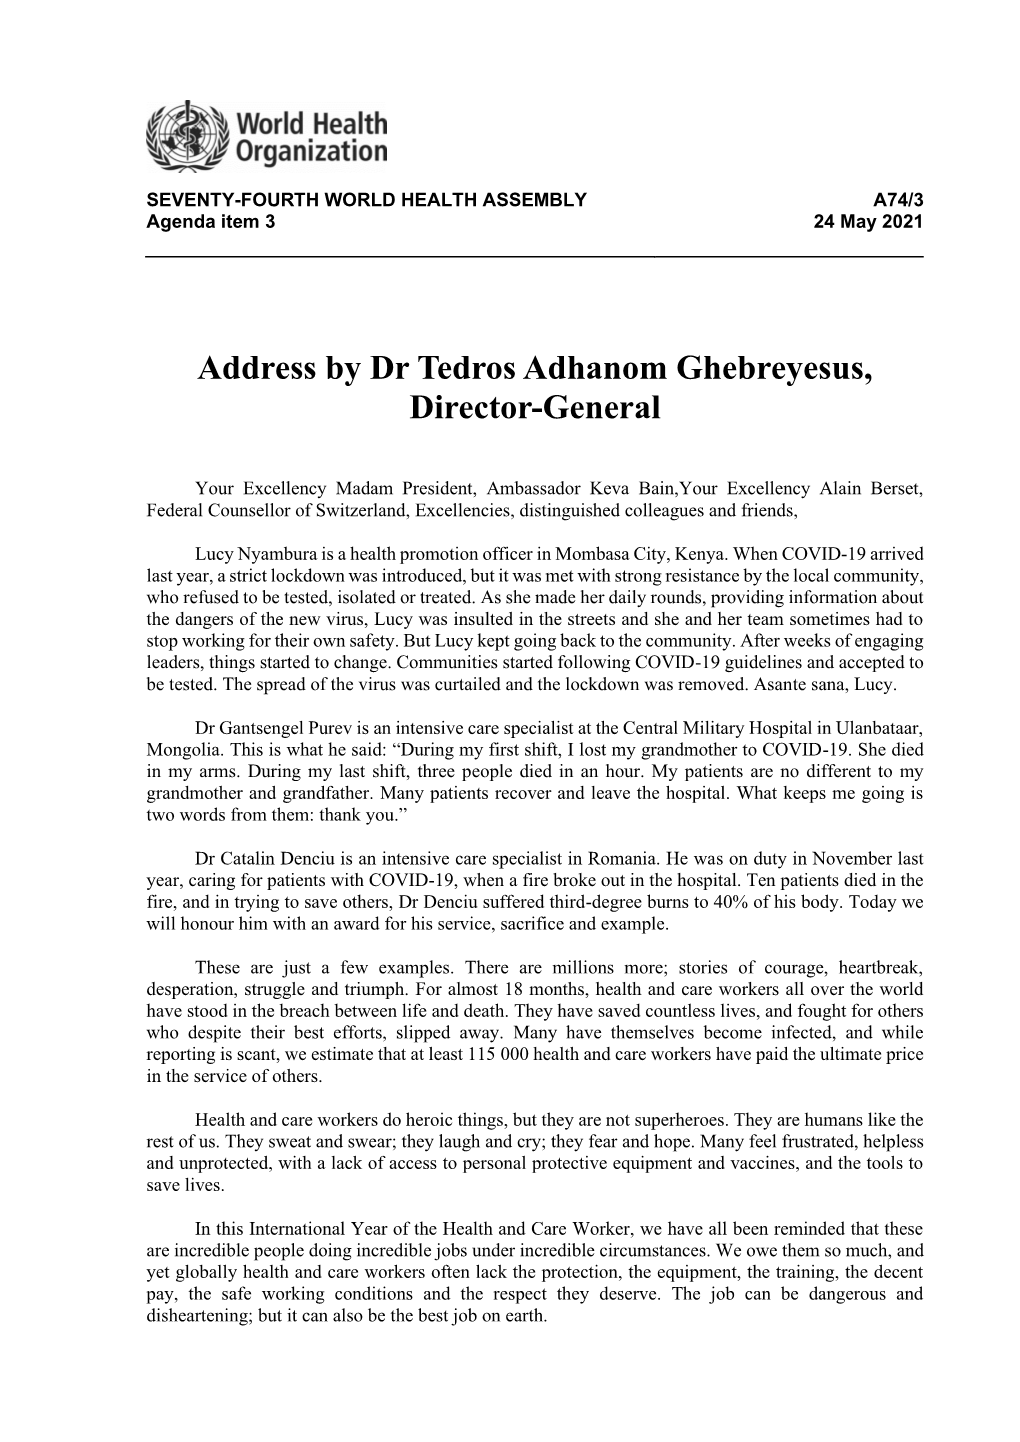 Address by Dr Tedros Adhanom Ghebreyesus, Director-General